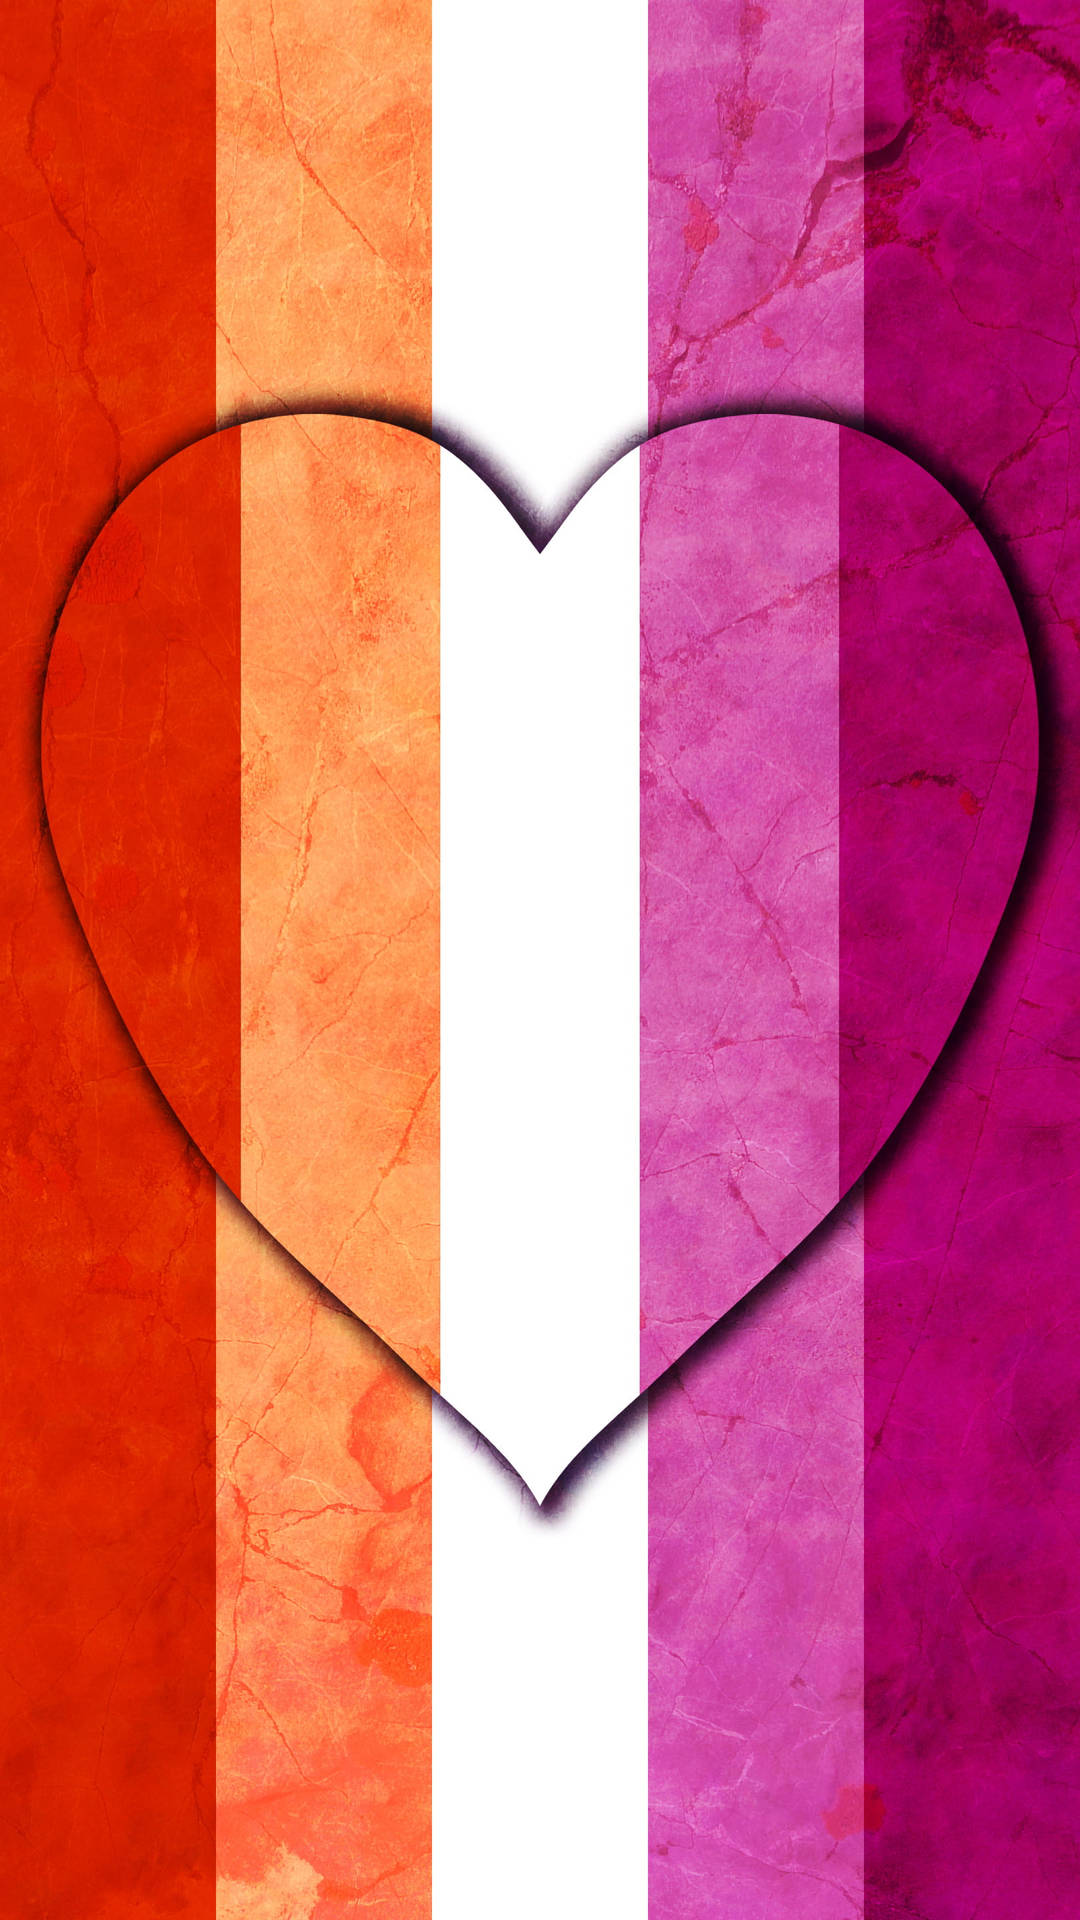 Lesbian Flag With A Heart